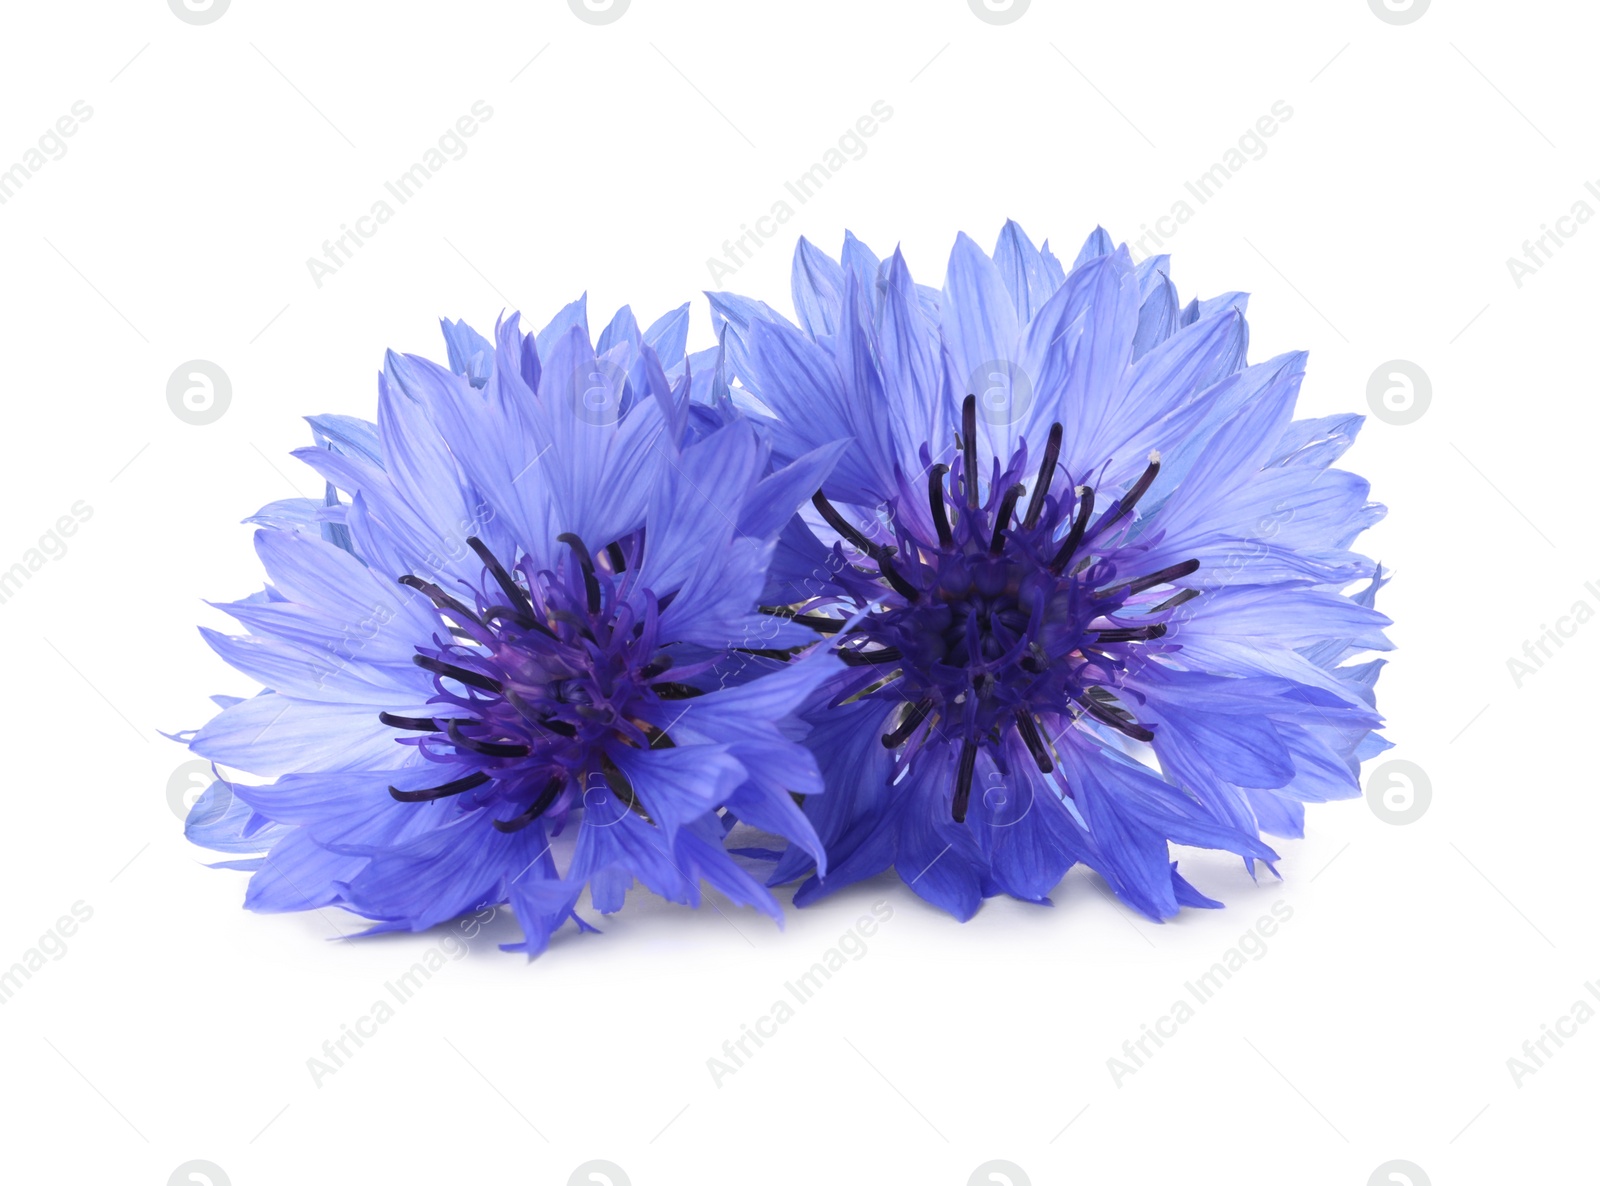 Image of Beautiful tender blue cornflowers isolated on white